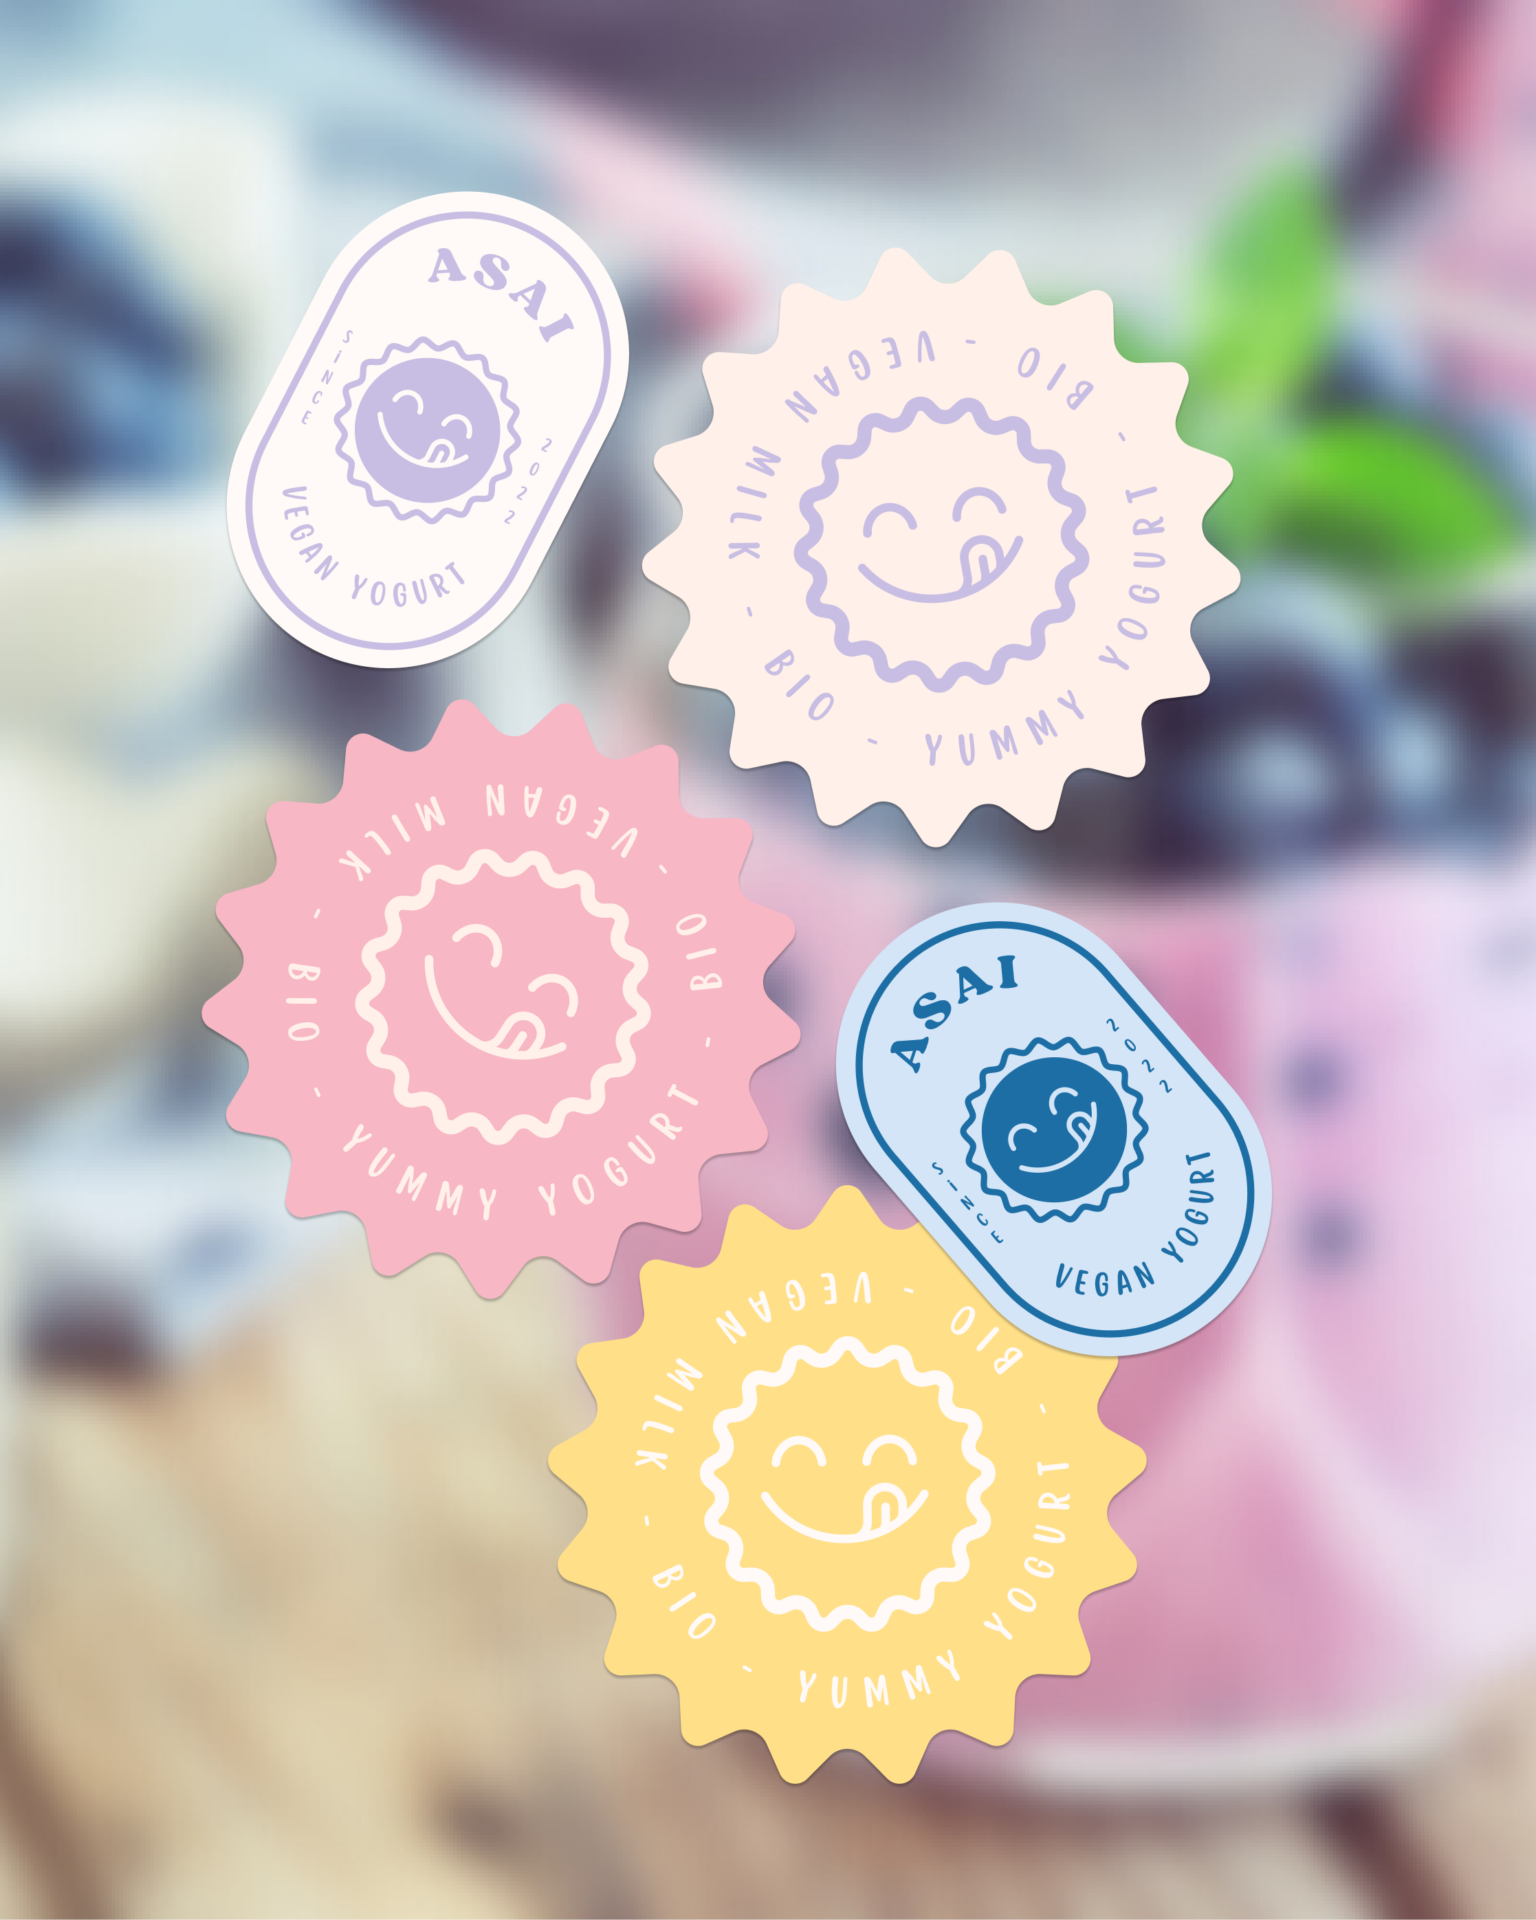 Asai logos produit yaourt vegan